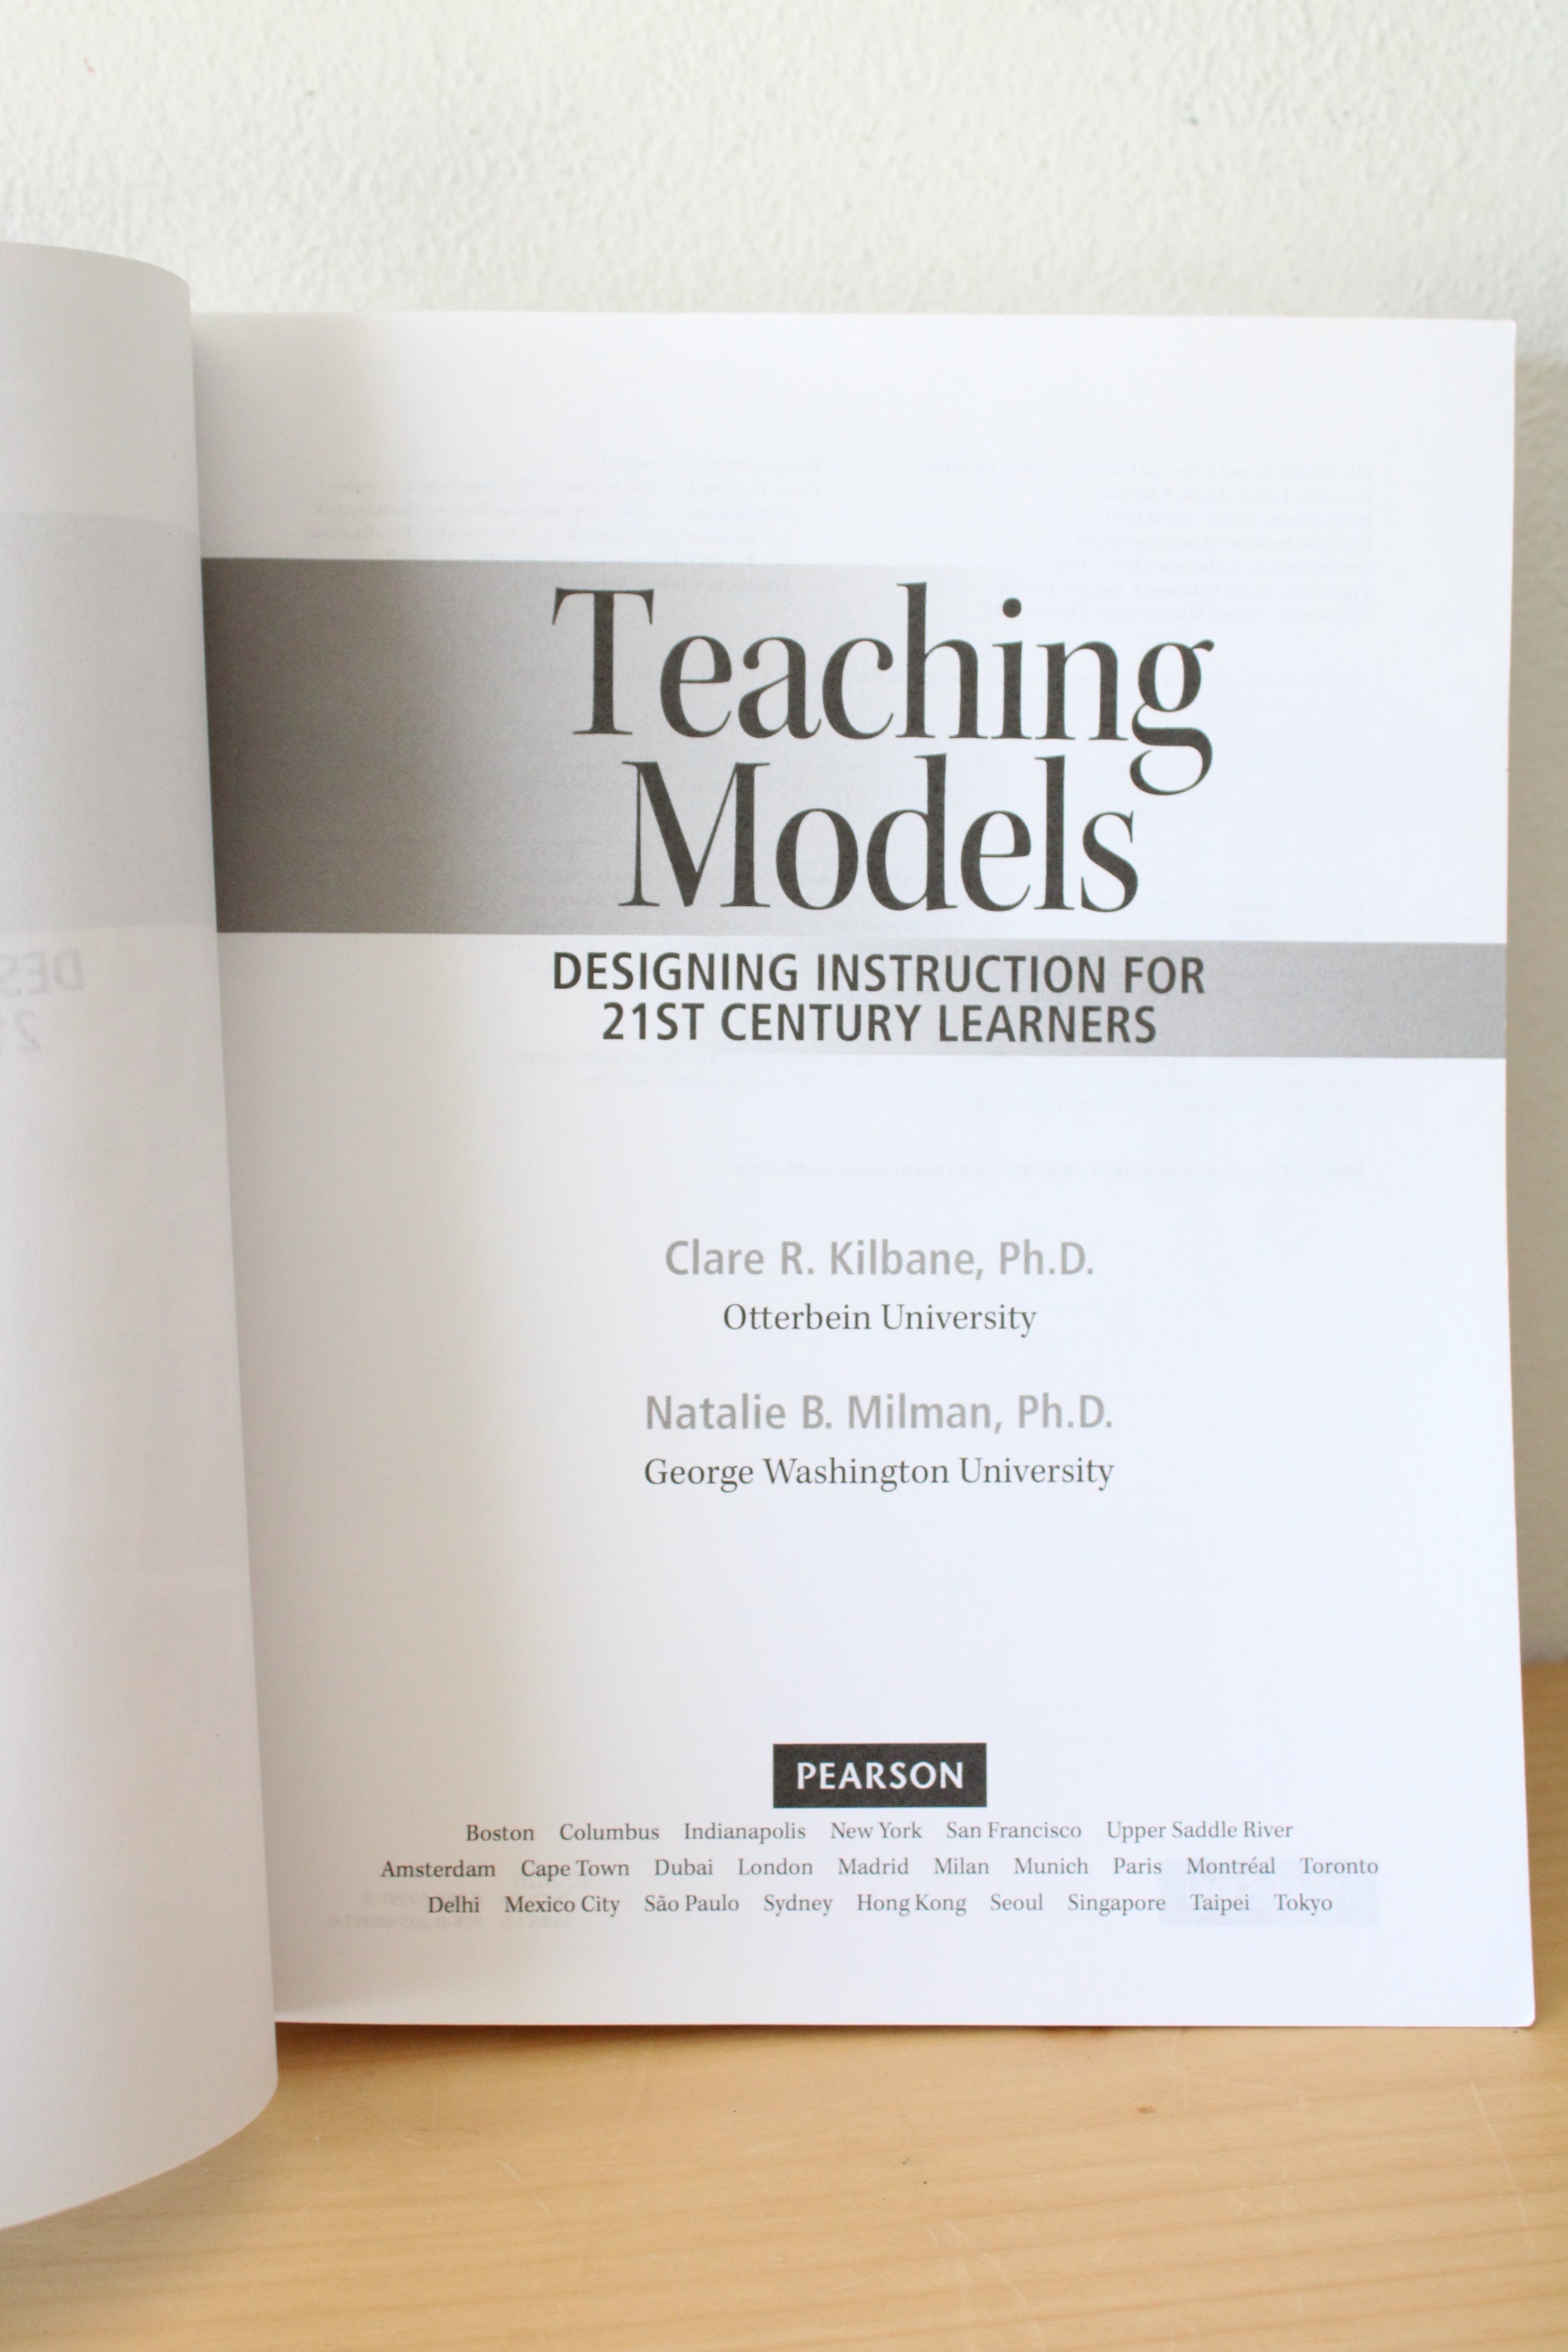 Teaching Models Designing Instruction For 21st Century Learners By Clare R. Kilbane & Natalie B. Milman